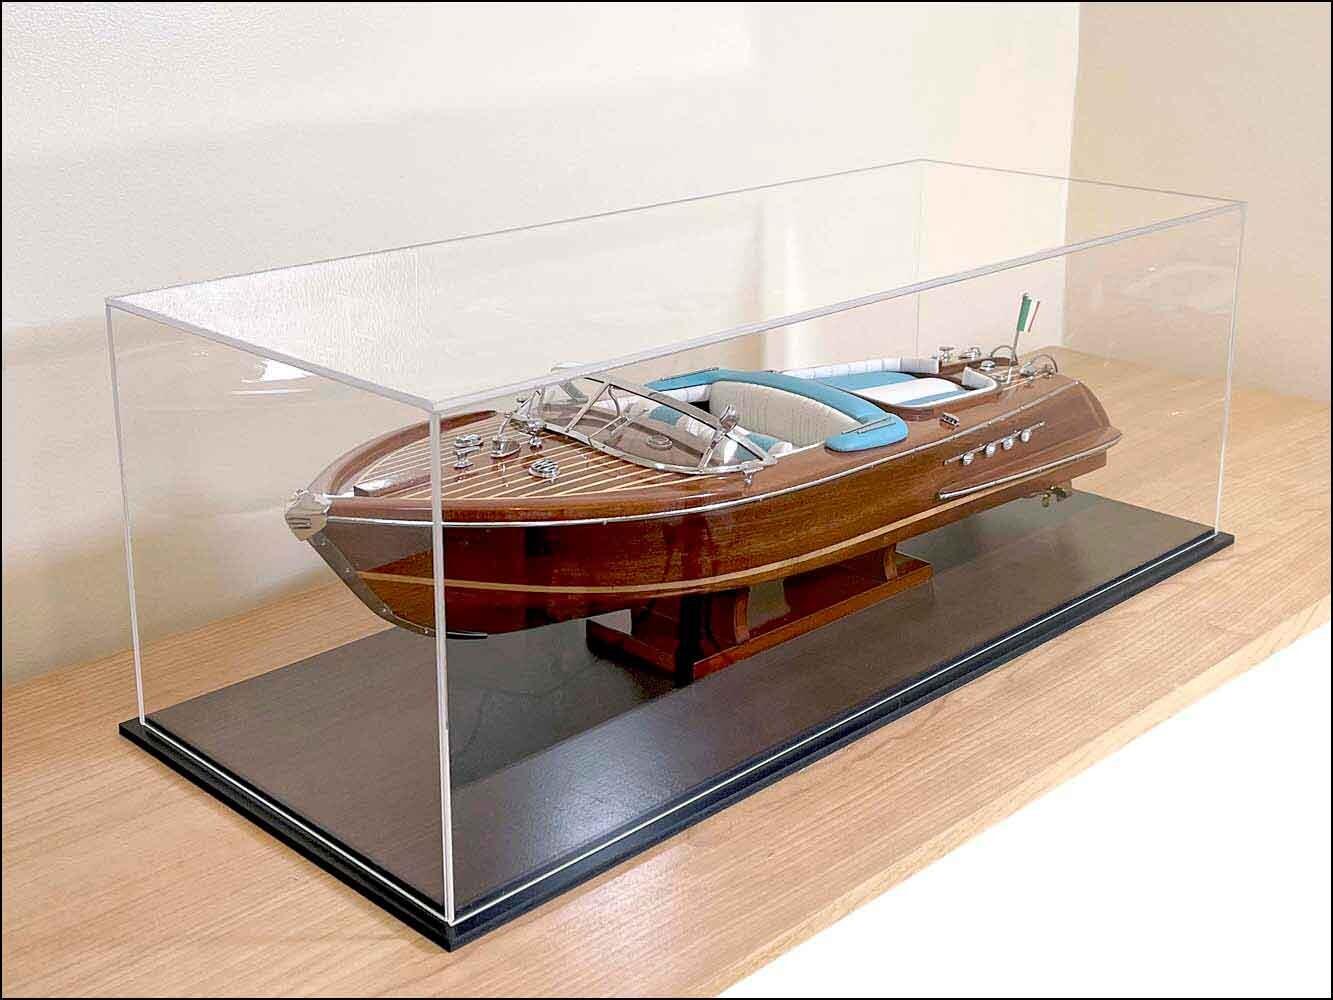 Riva Aquarama replica in display case